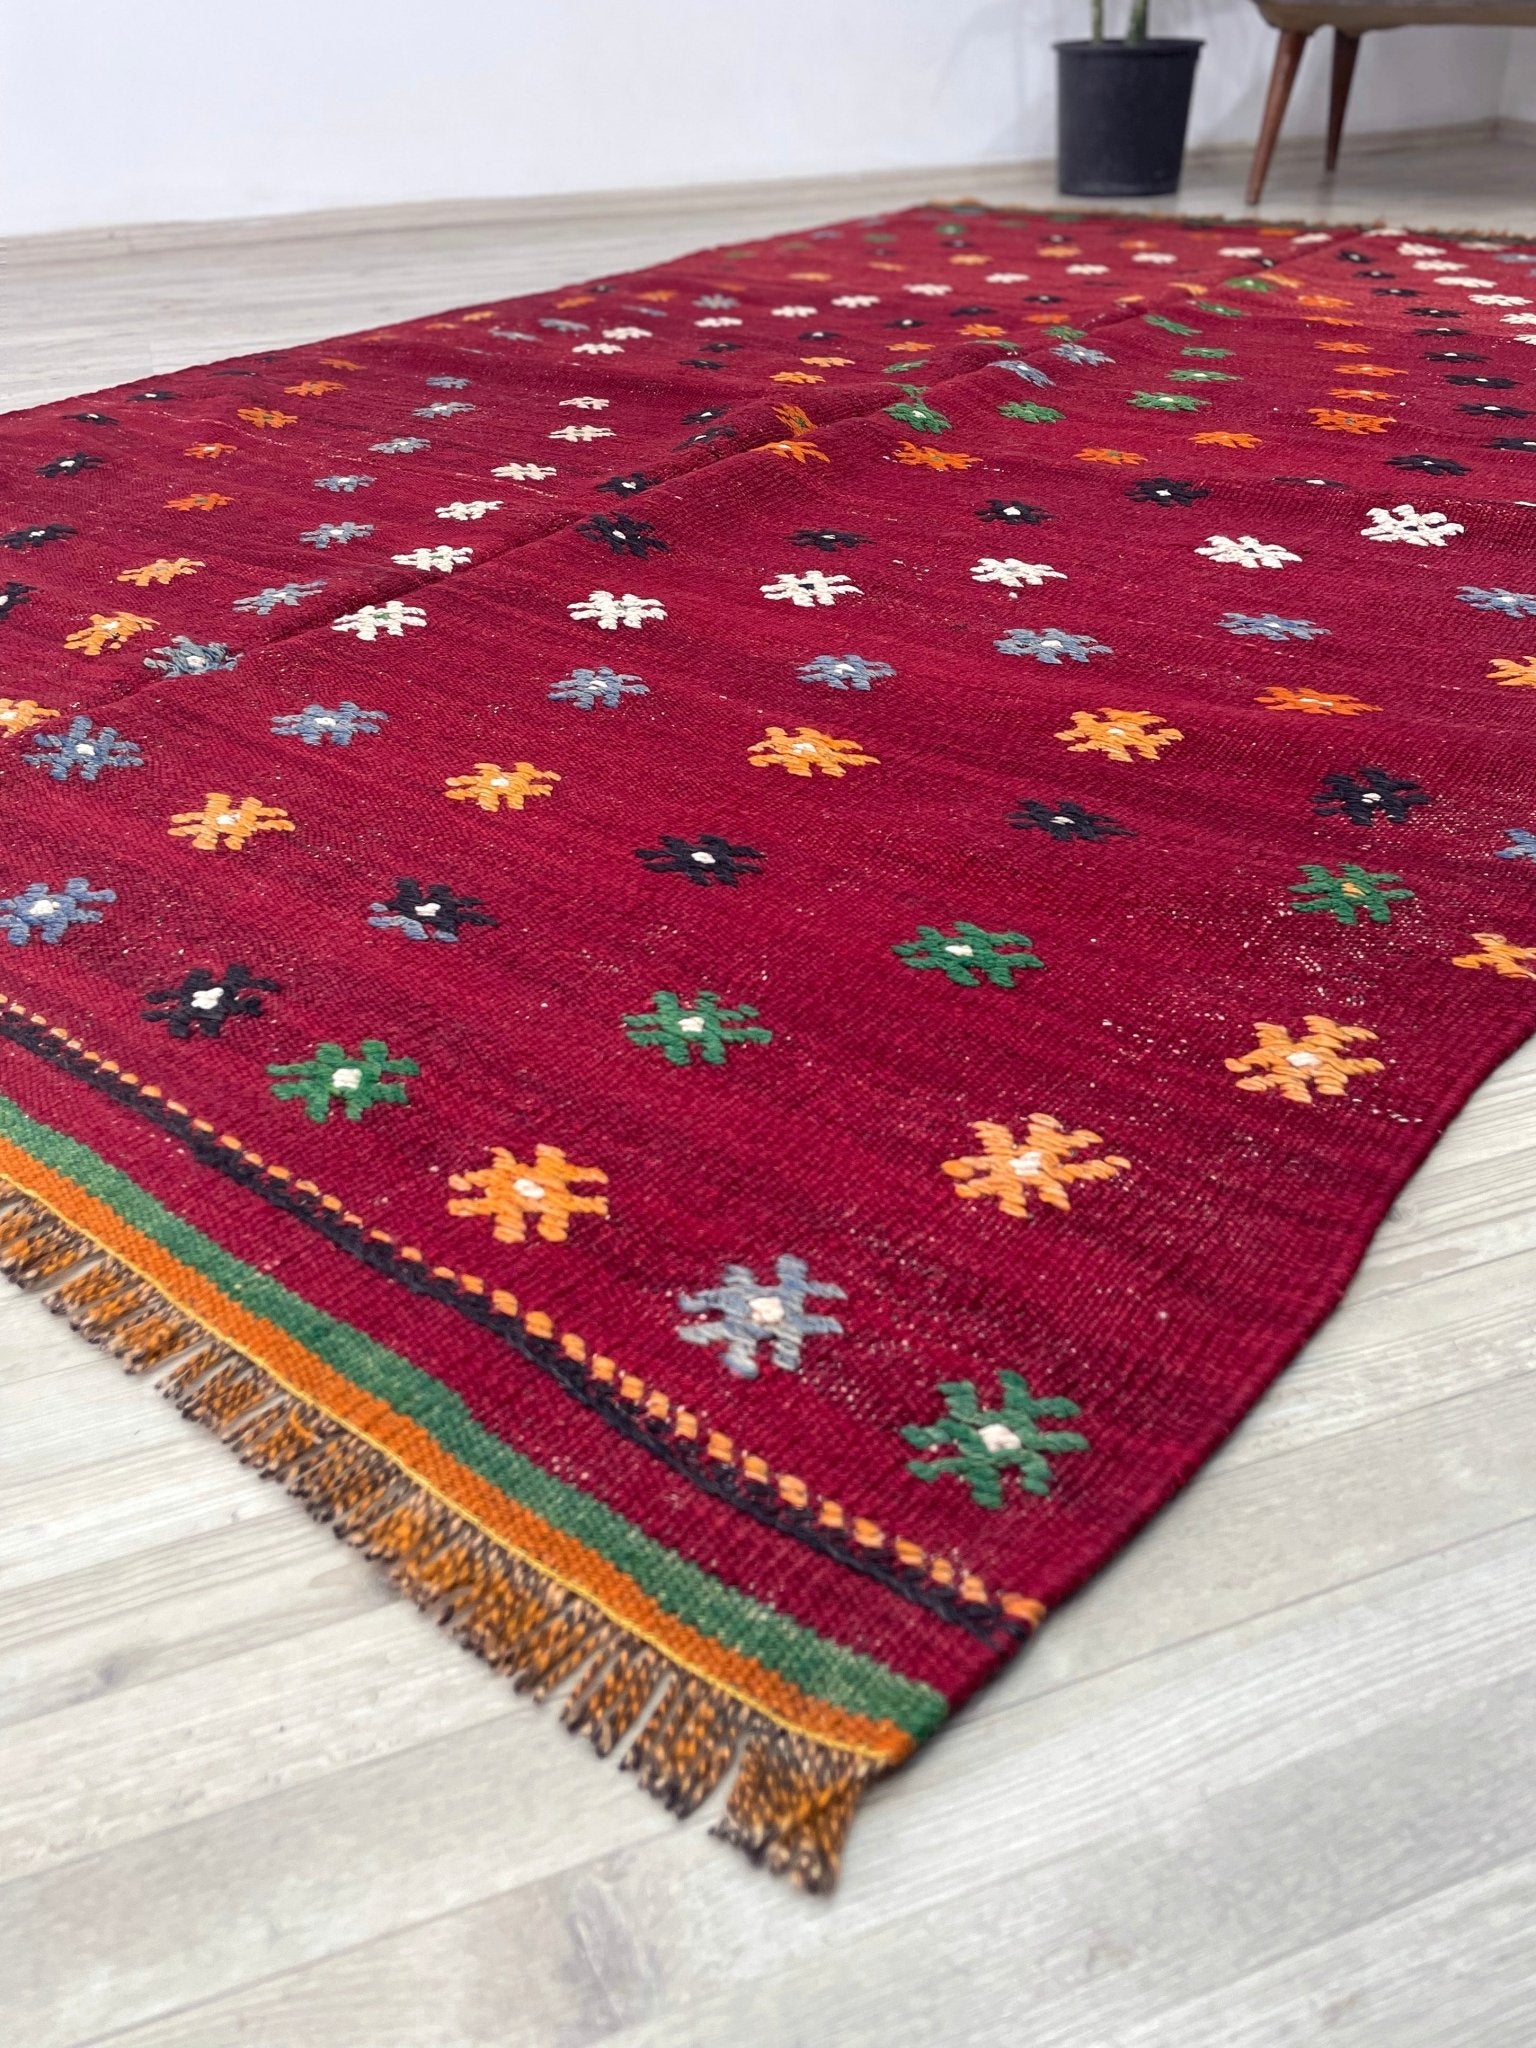 pergamum turkish kilim rug shop san francisco bay area berkeley palo alto but rug online shopping